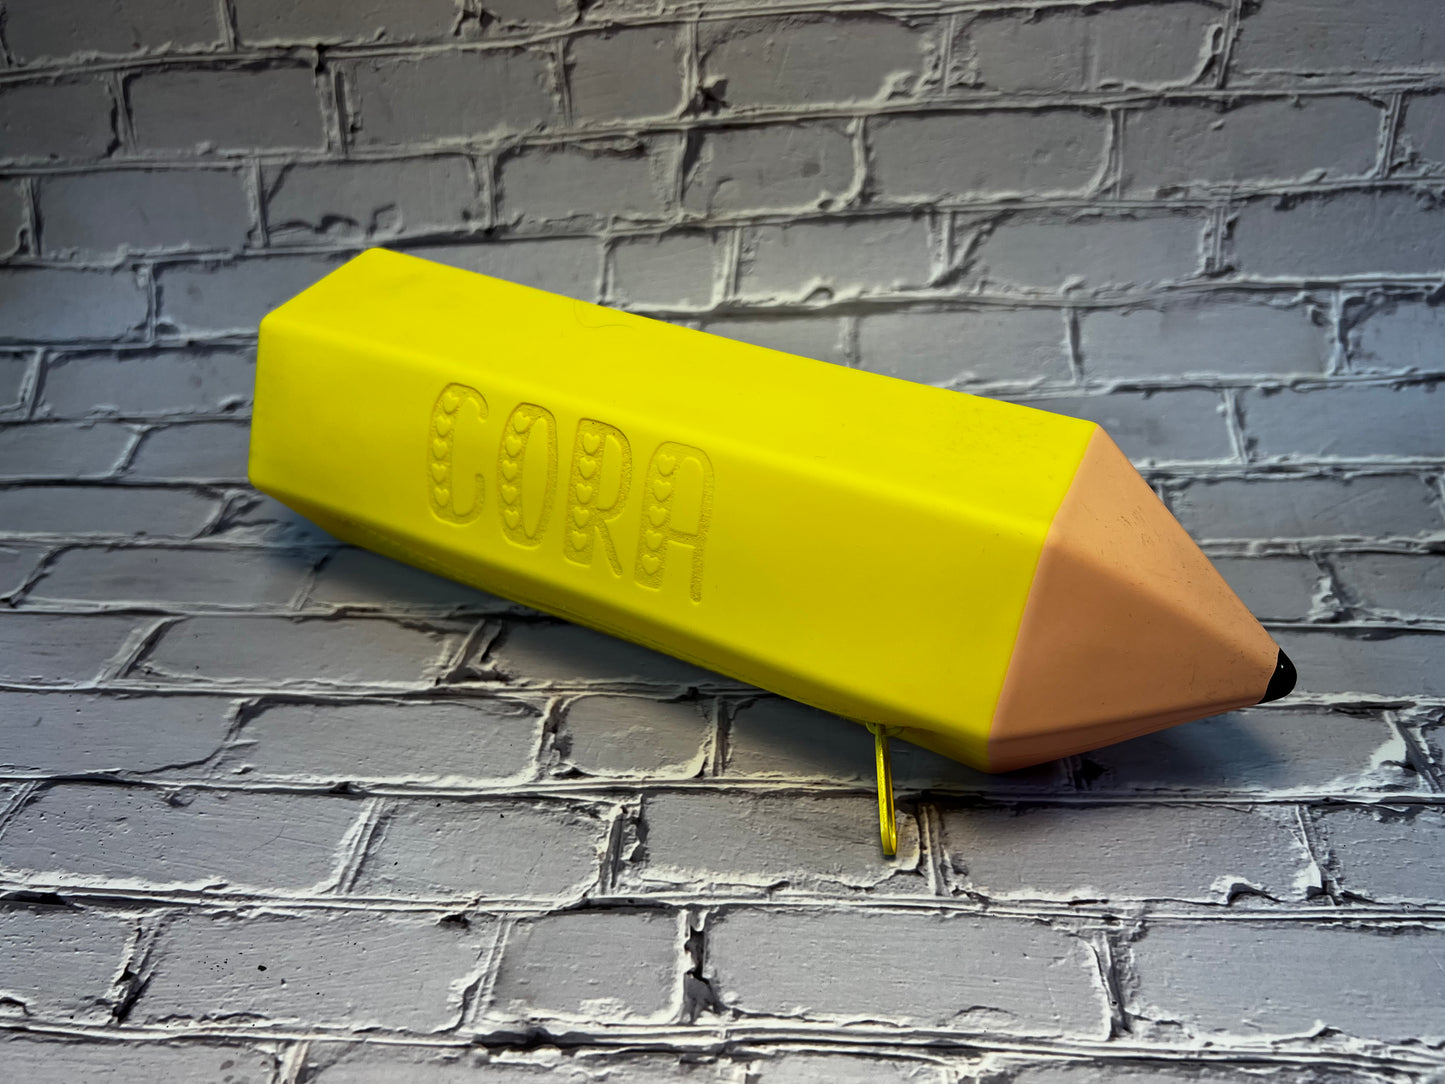 Silicone pencil shaped pencil case